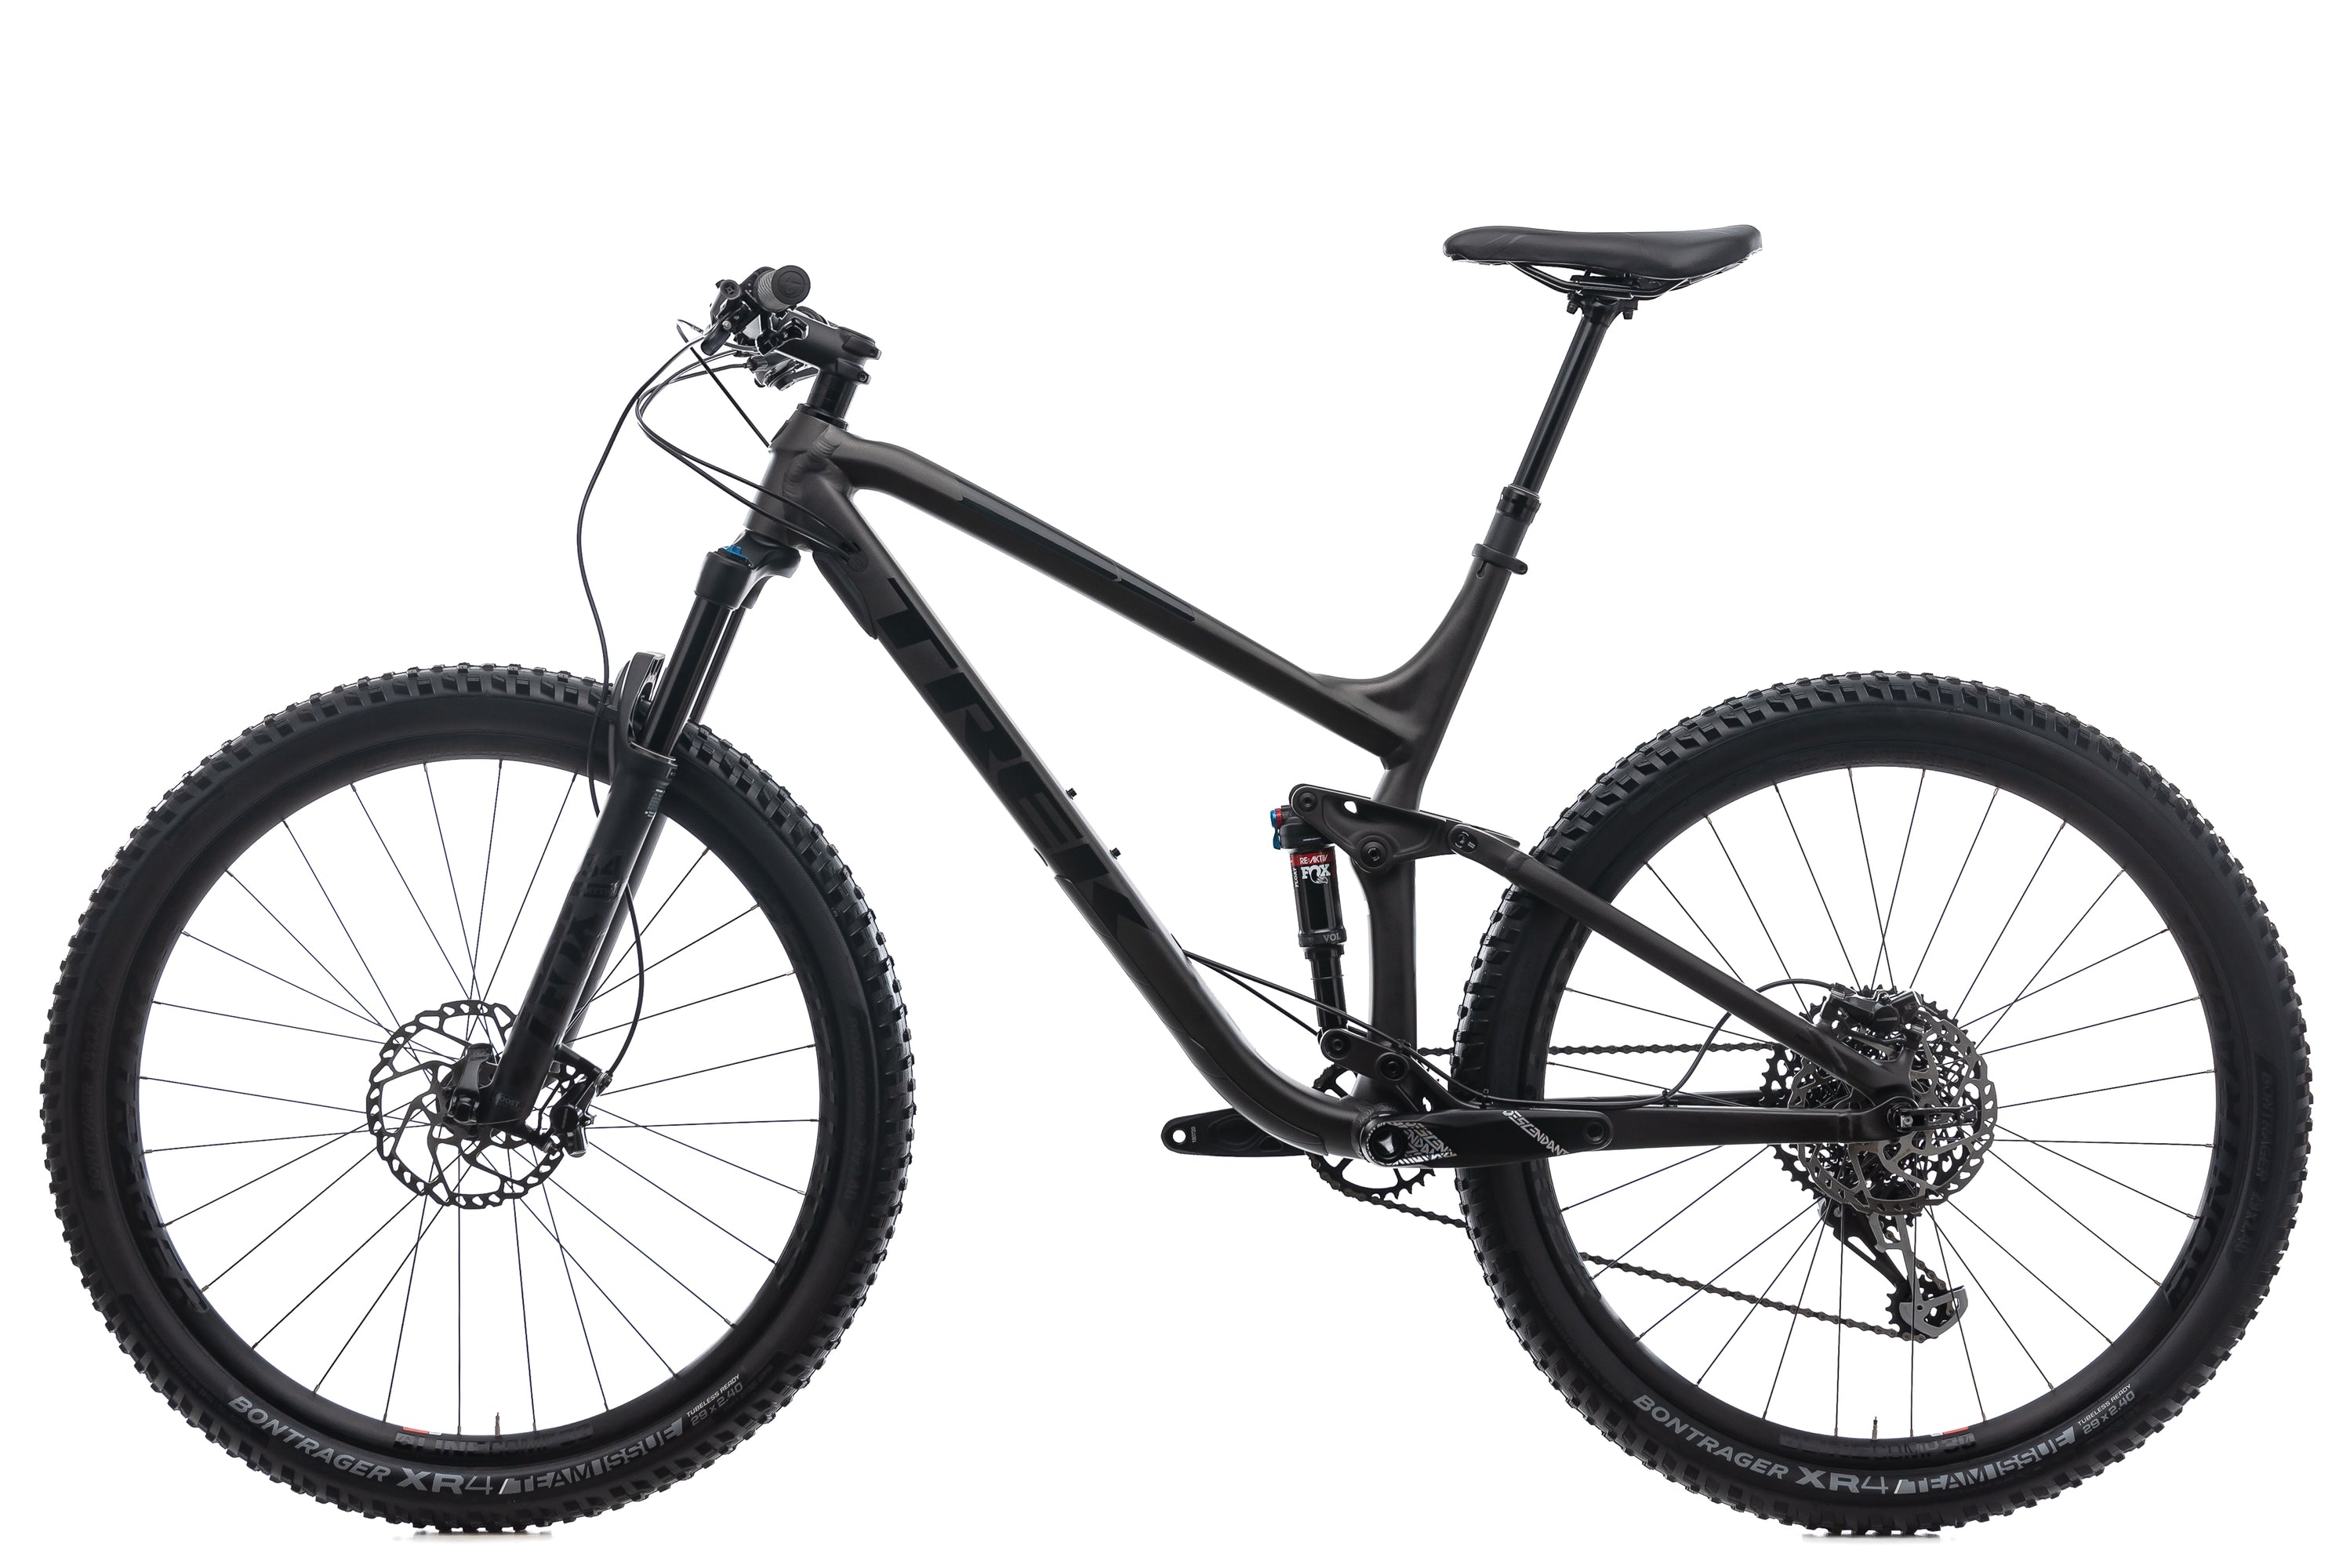 Trek Fuel EX 8 29 21.5" Bike - 2019 non-drive side